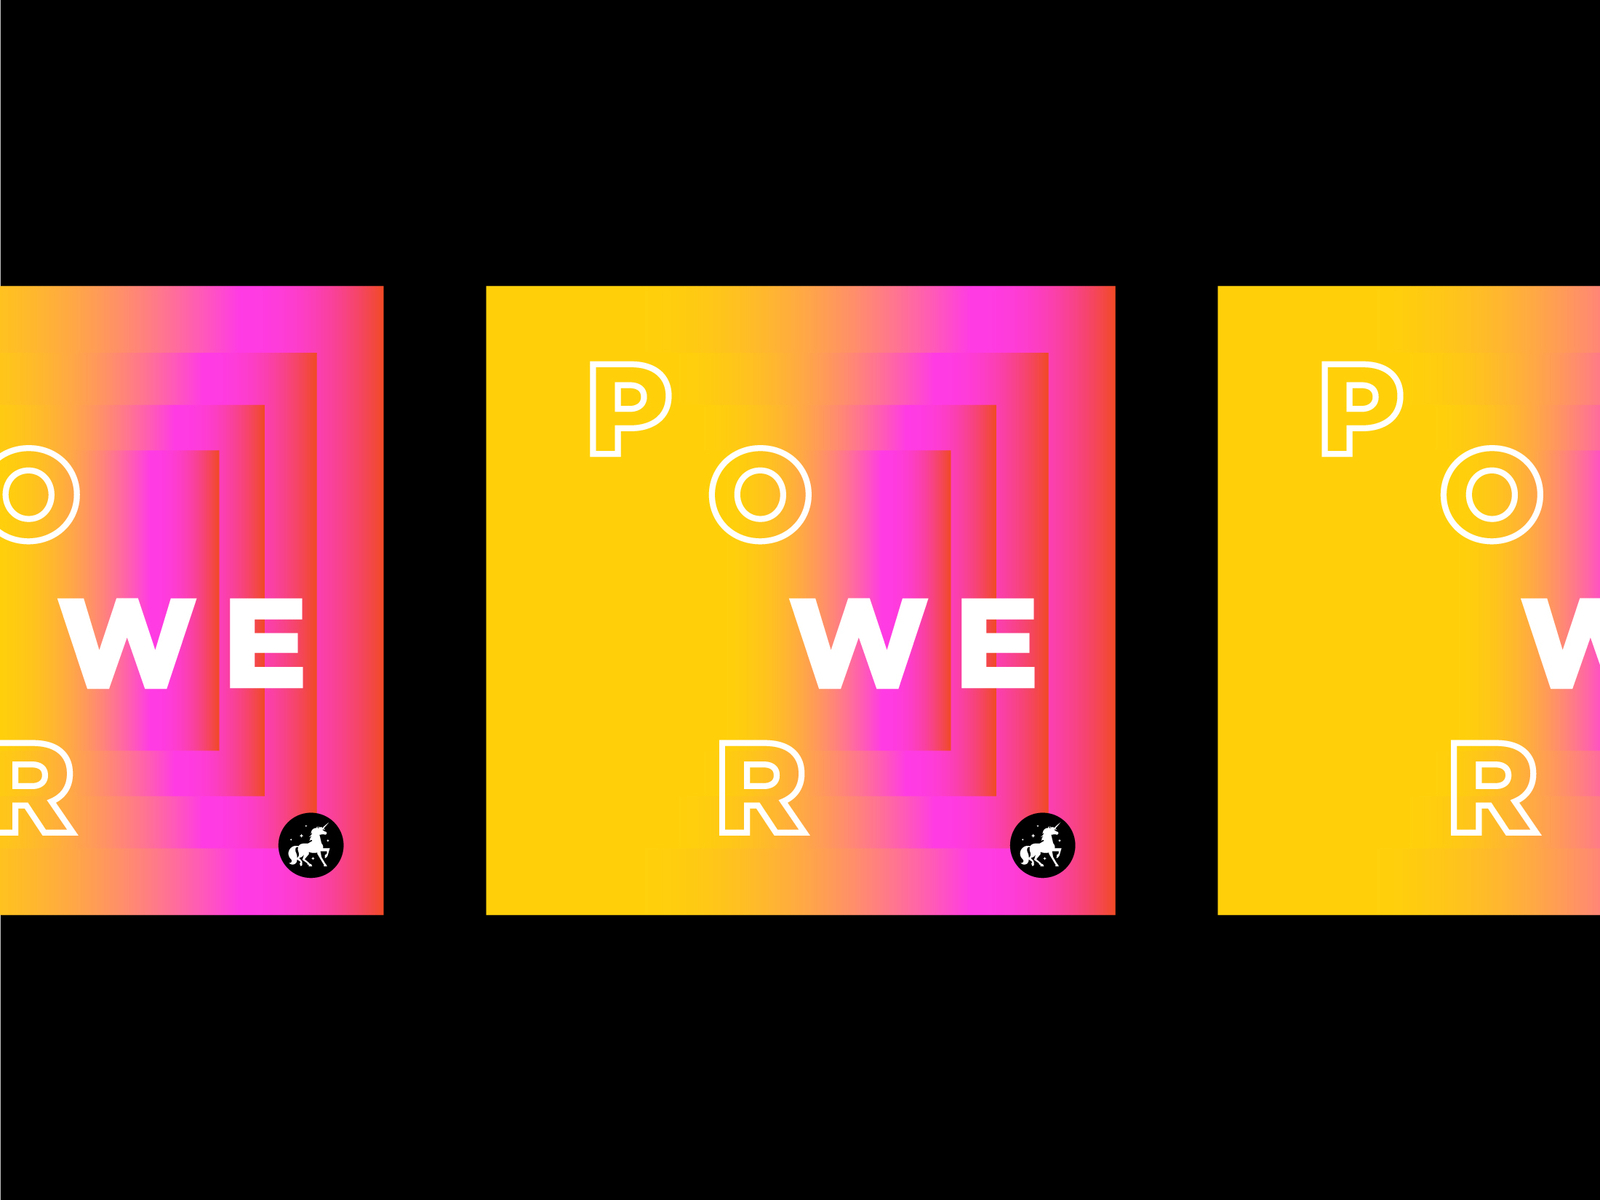 The Power Of We design feminism feminist gradient illustration power type typography women womens history month